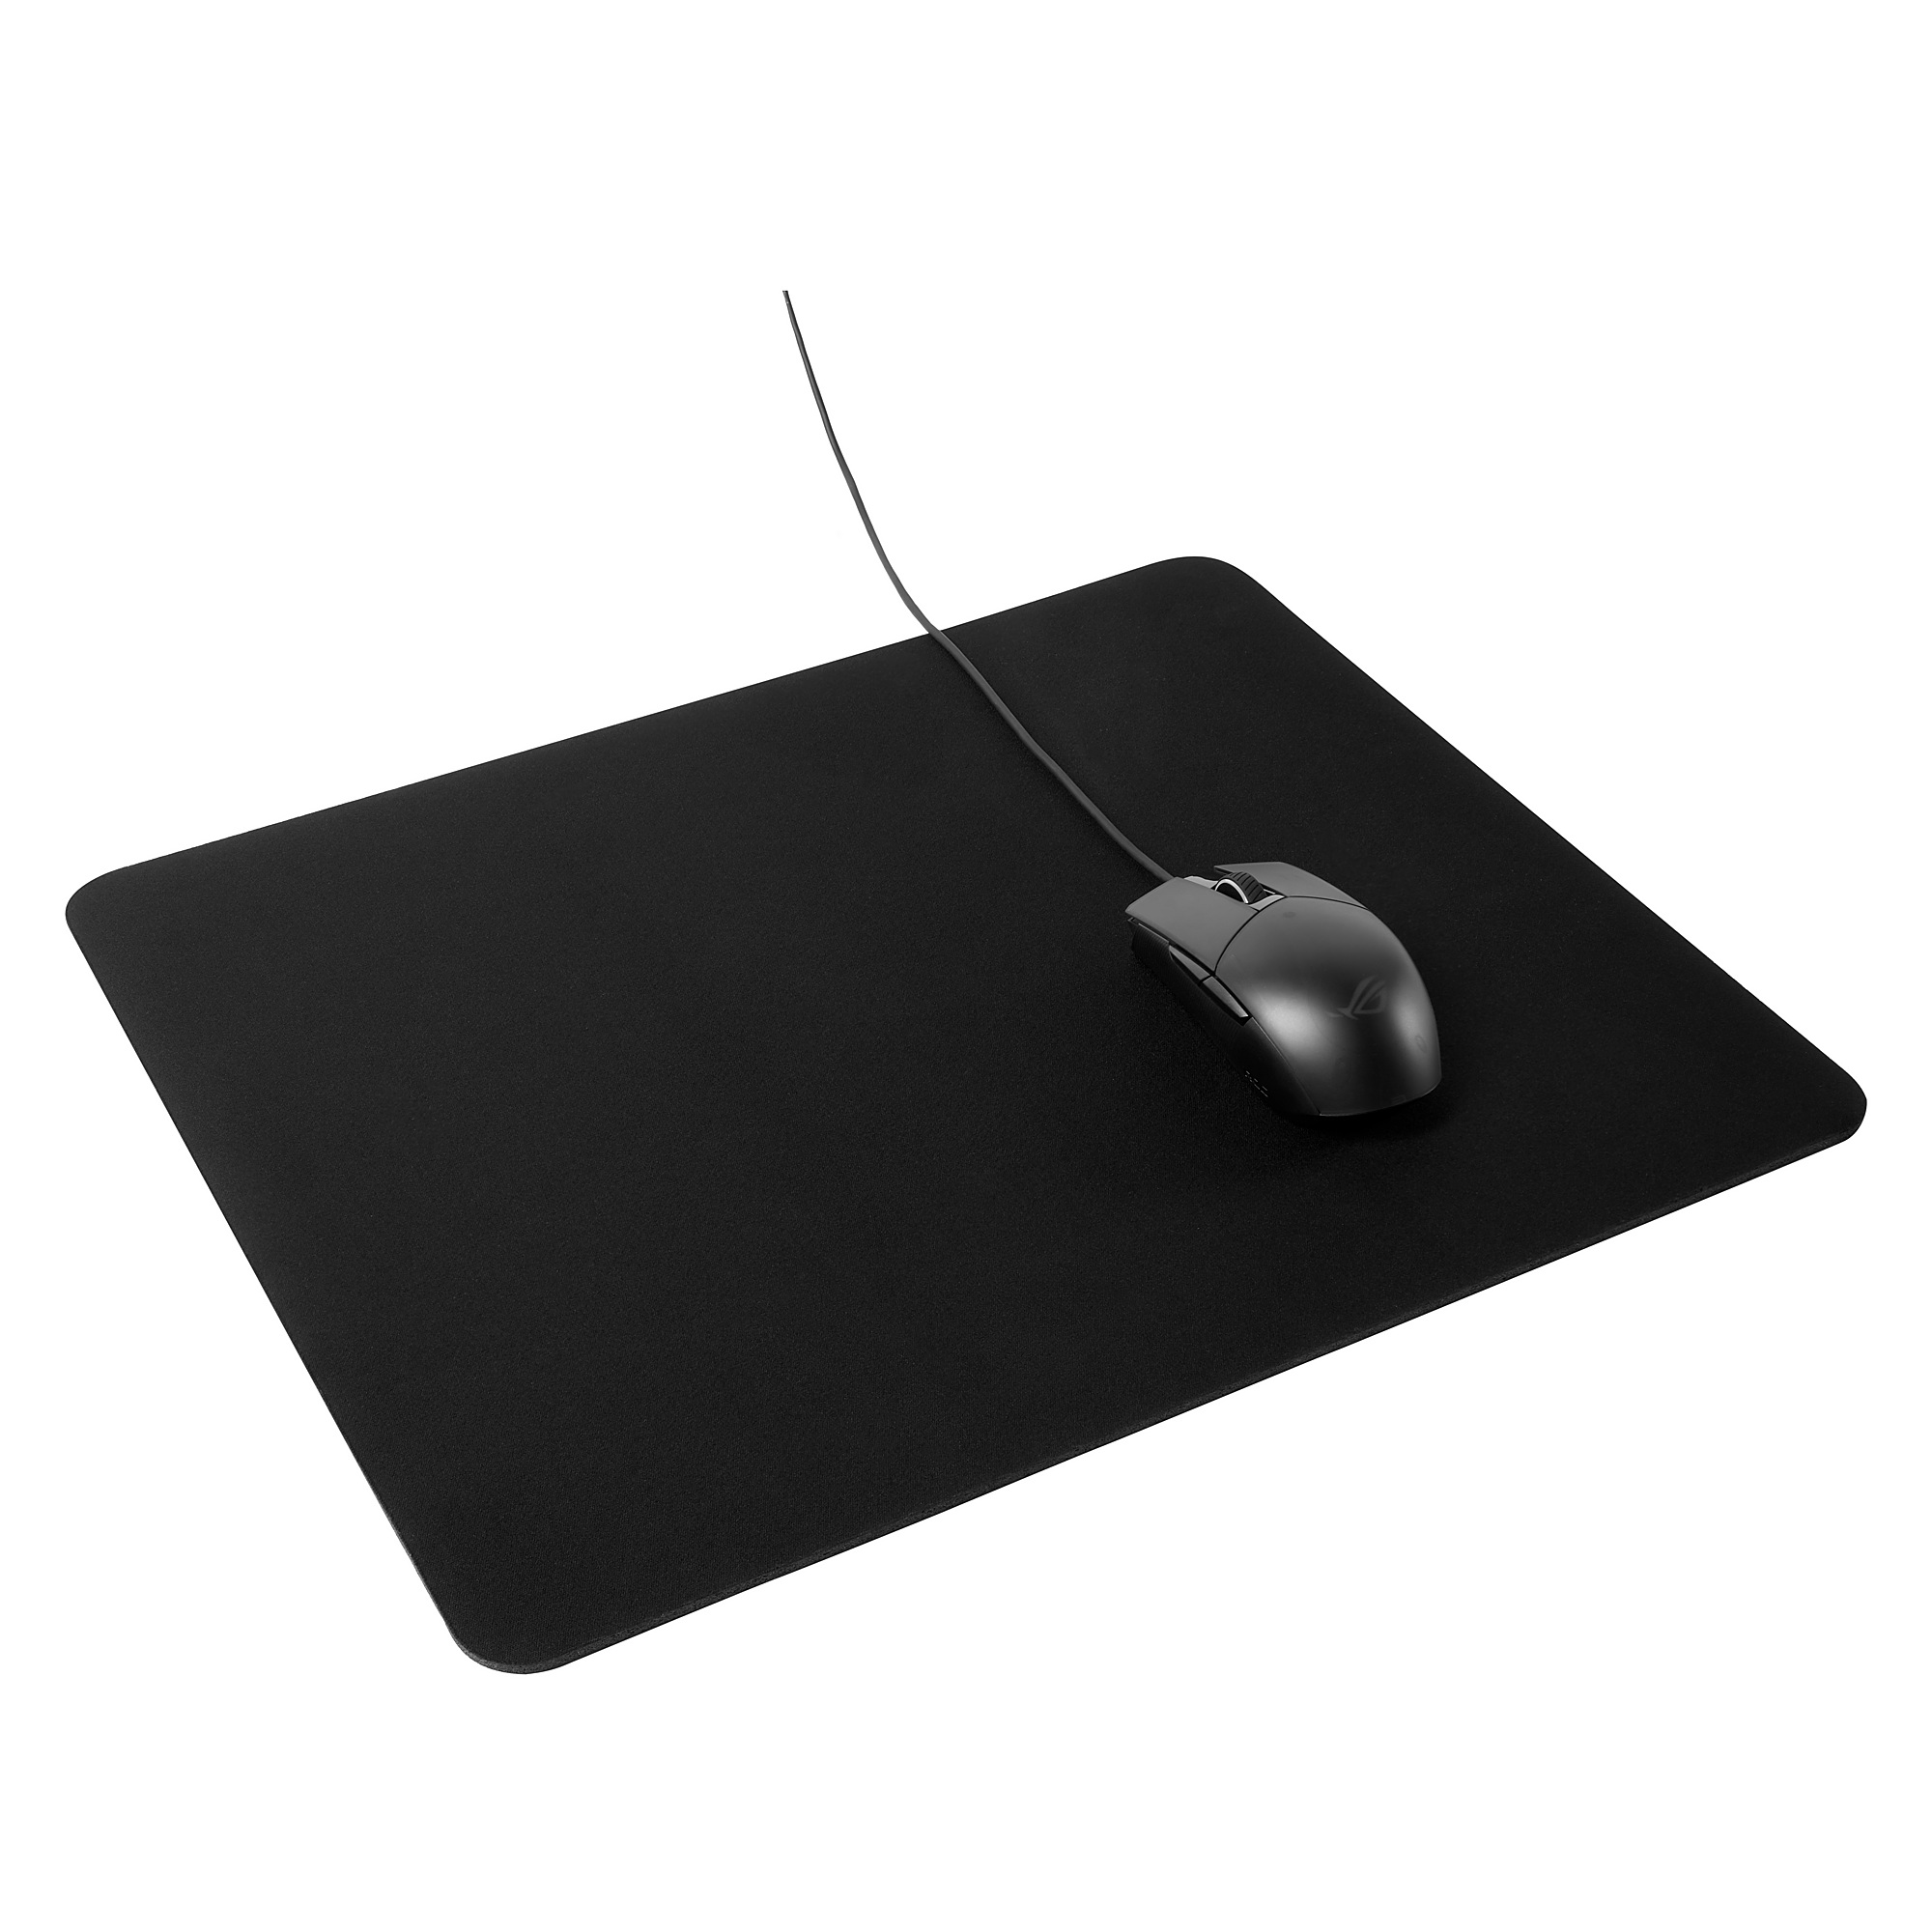 LÅNESPELARE gaming mouse pad